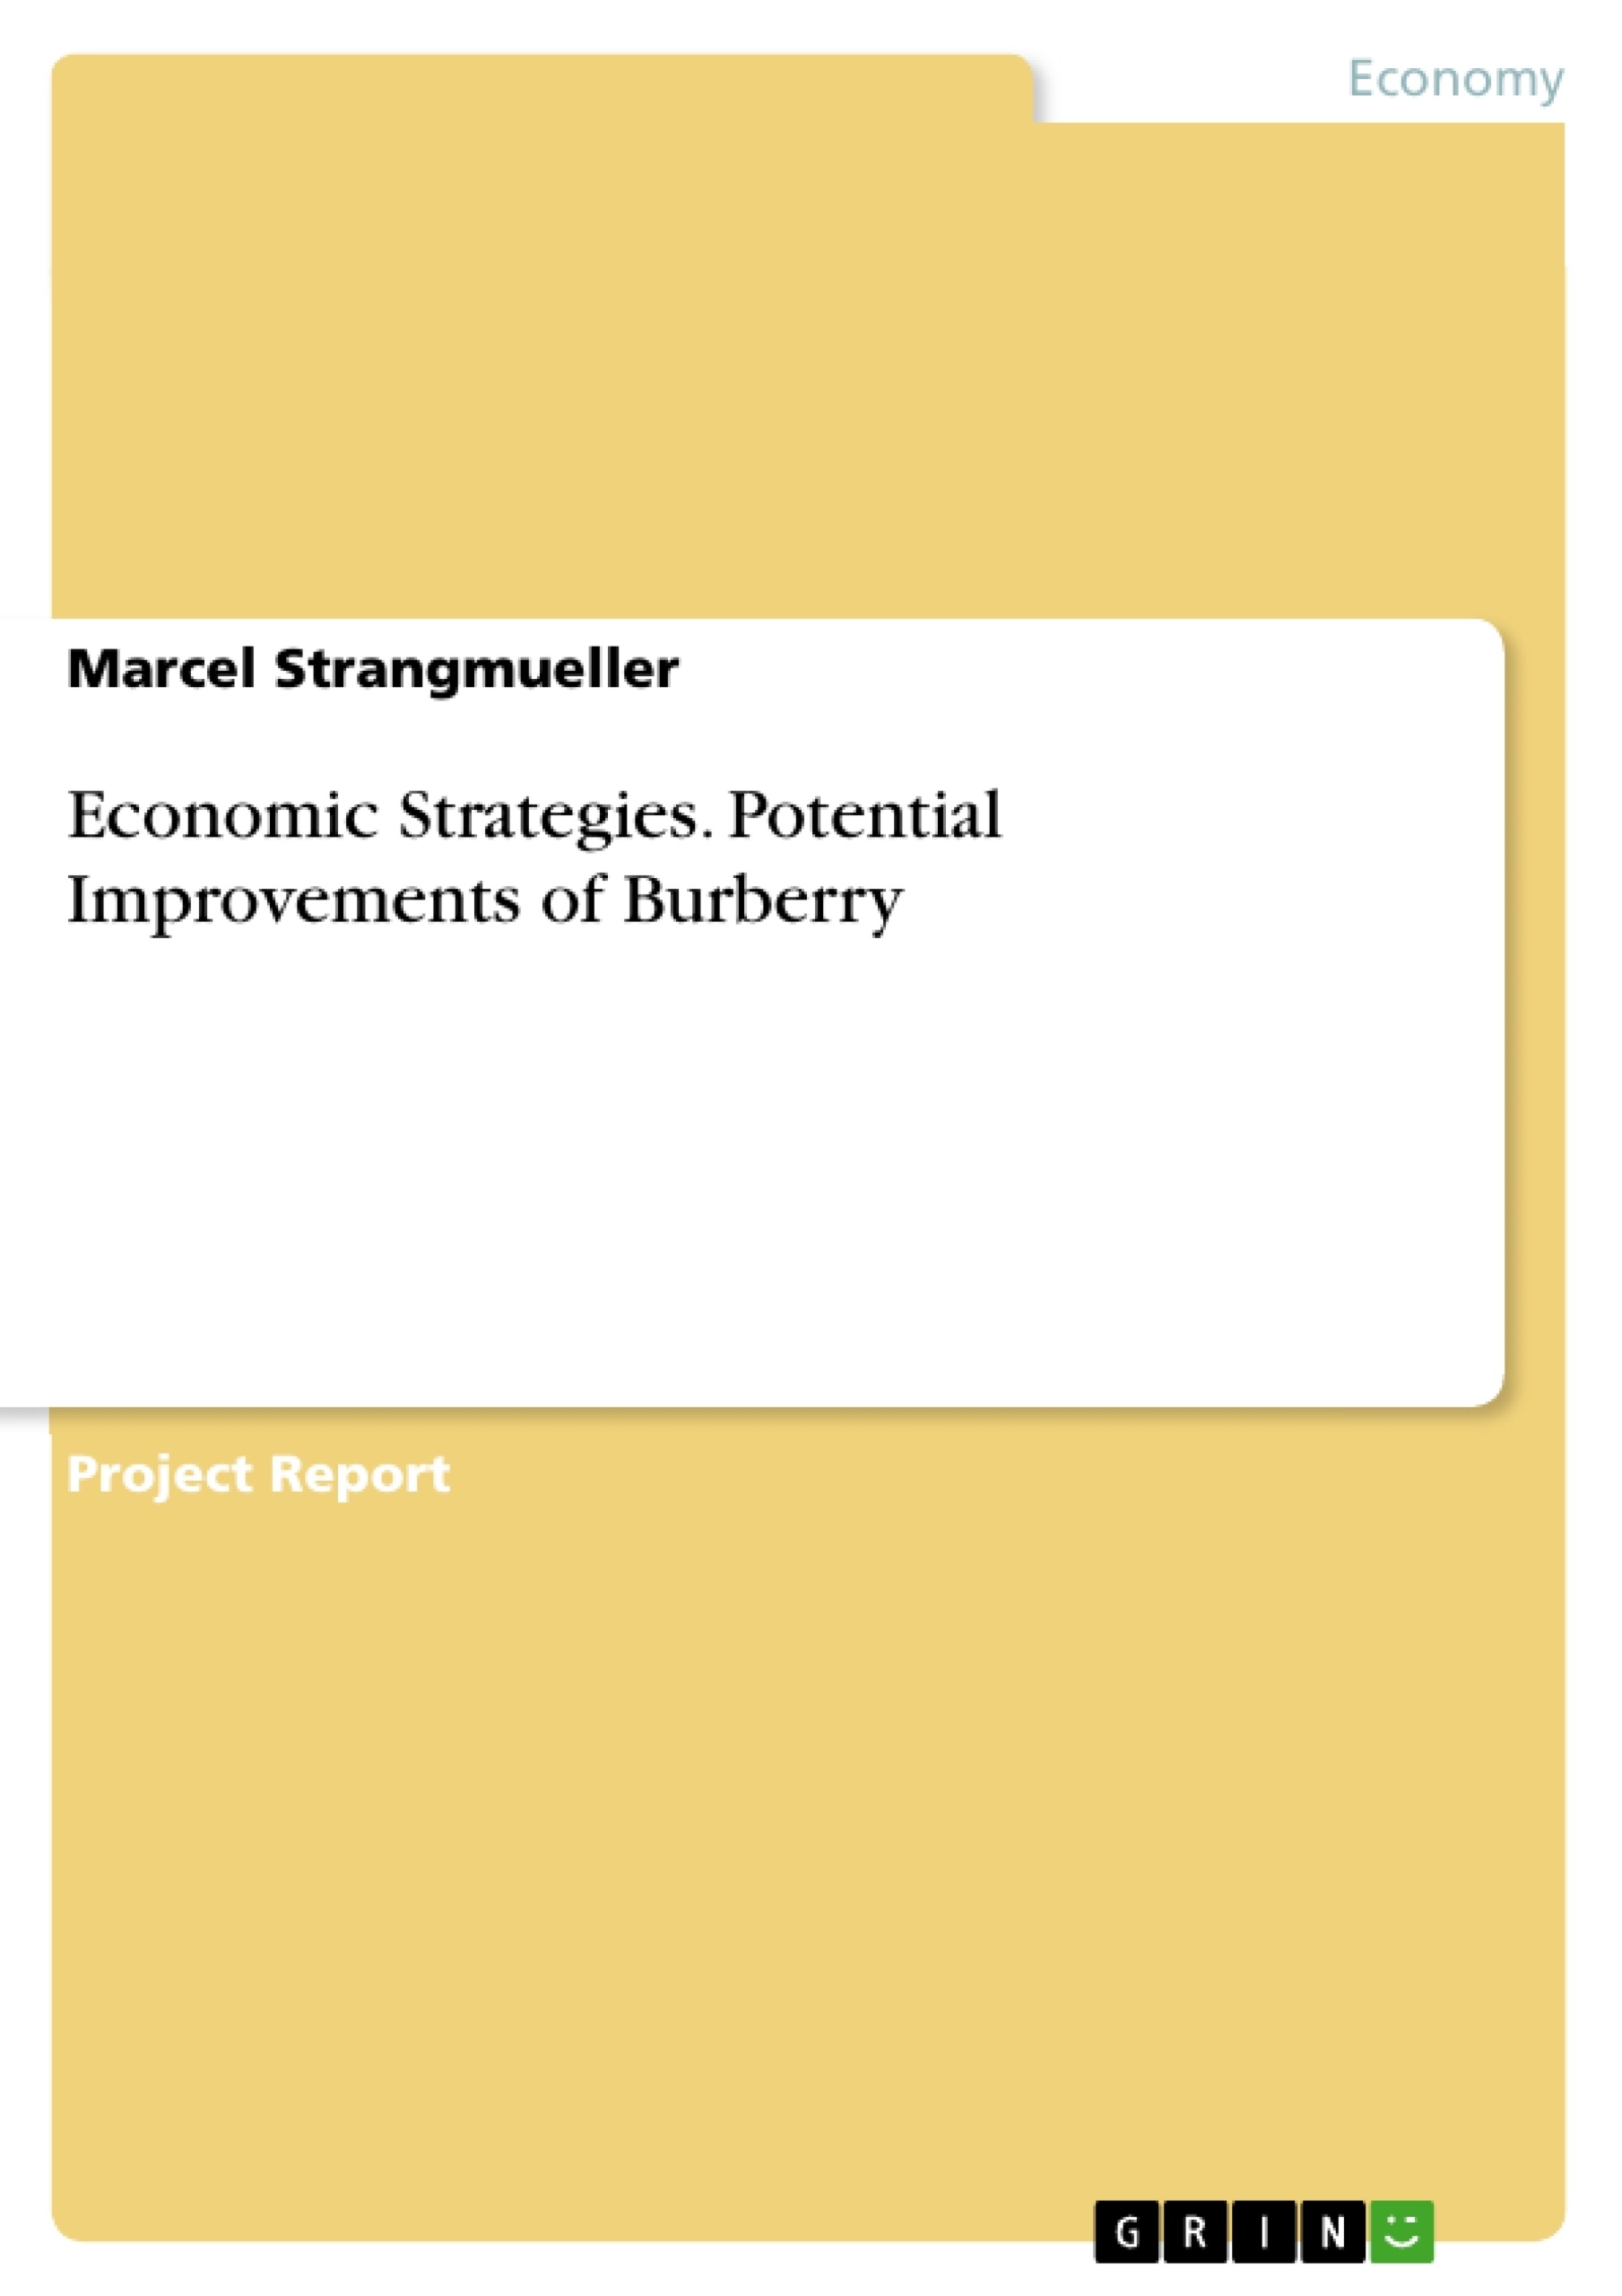 Title: Economic Strategies. Potential Improvements of Burberry